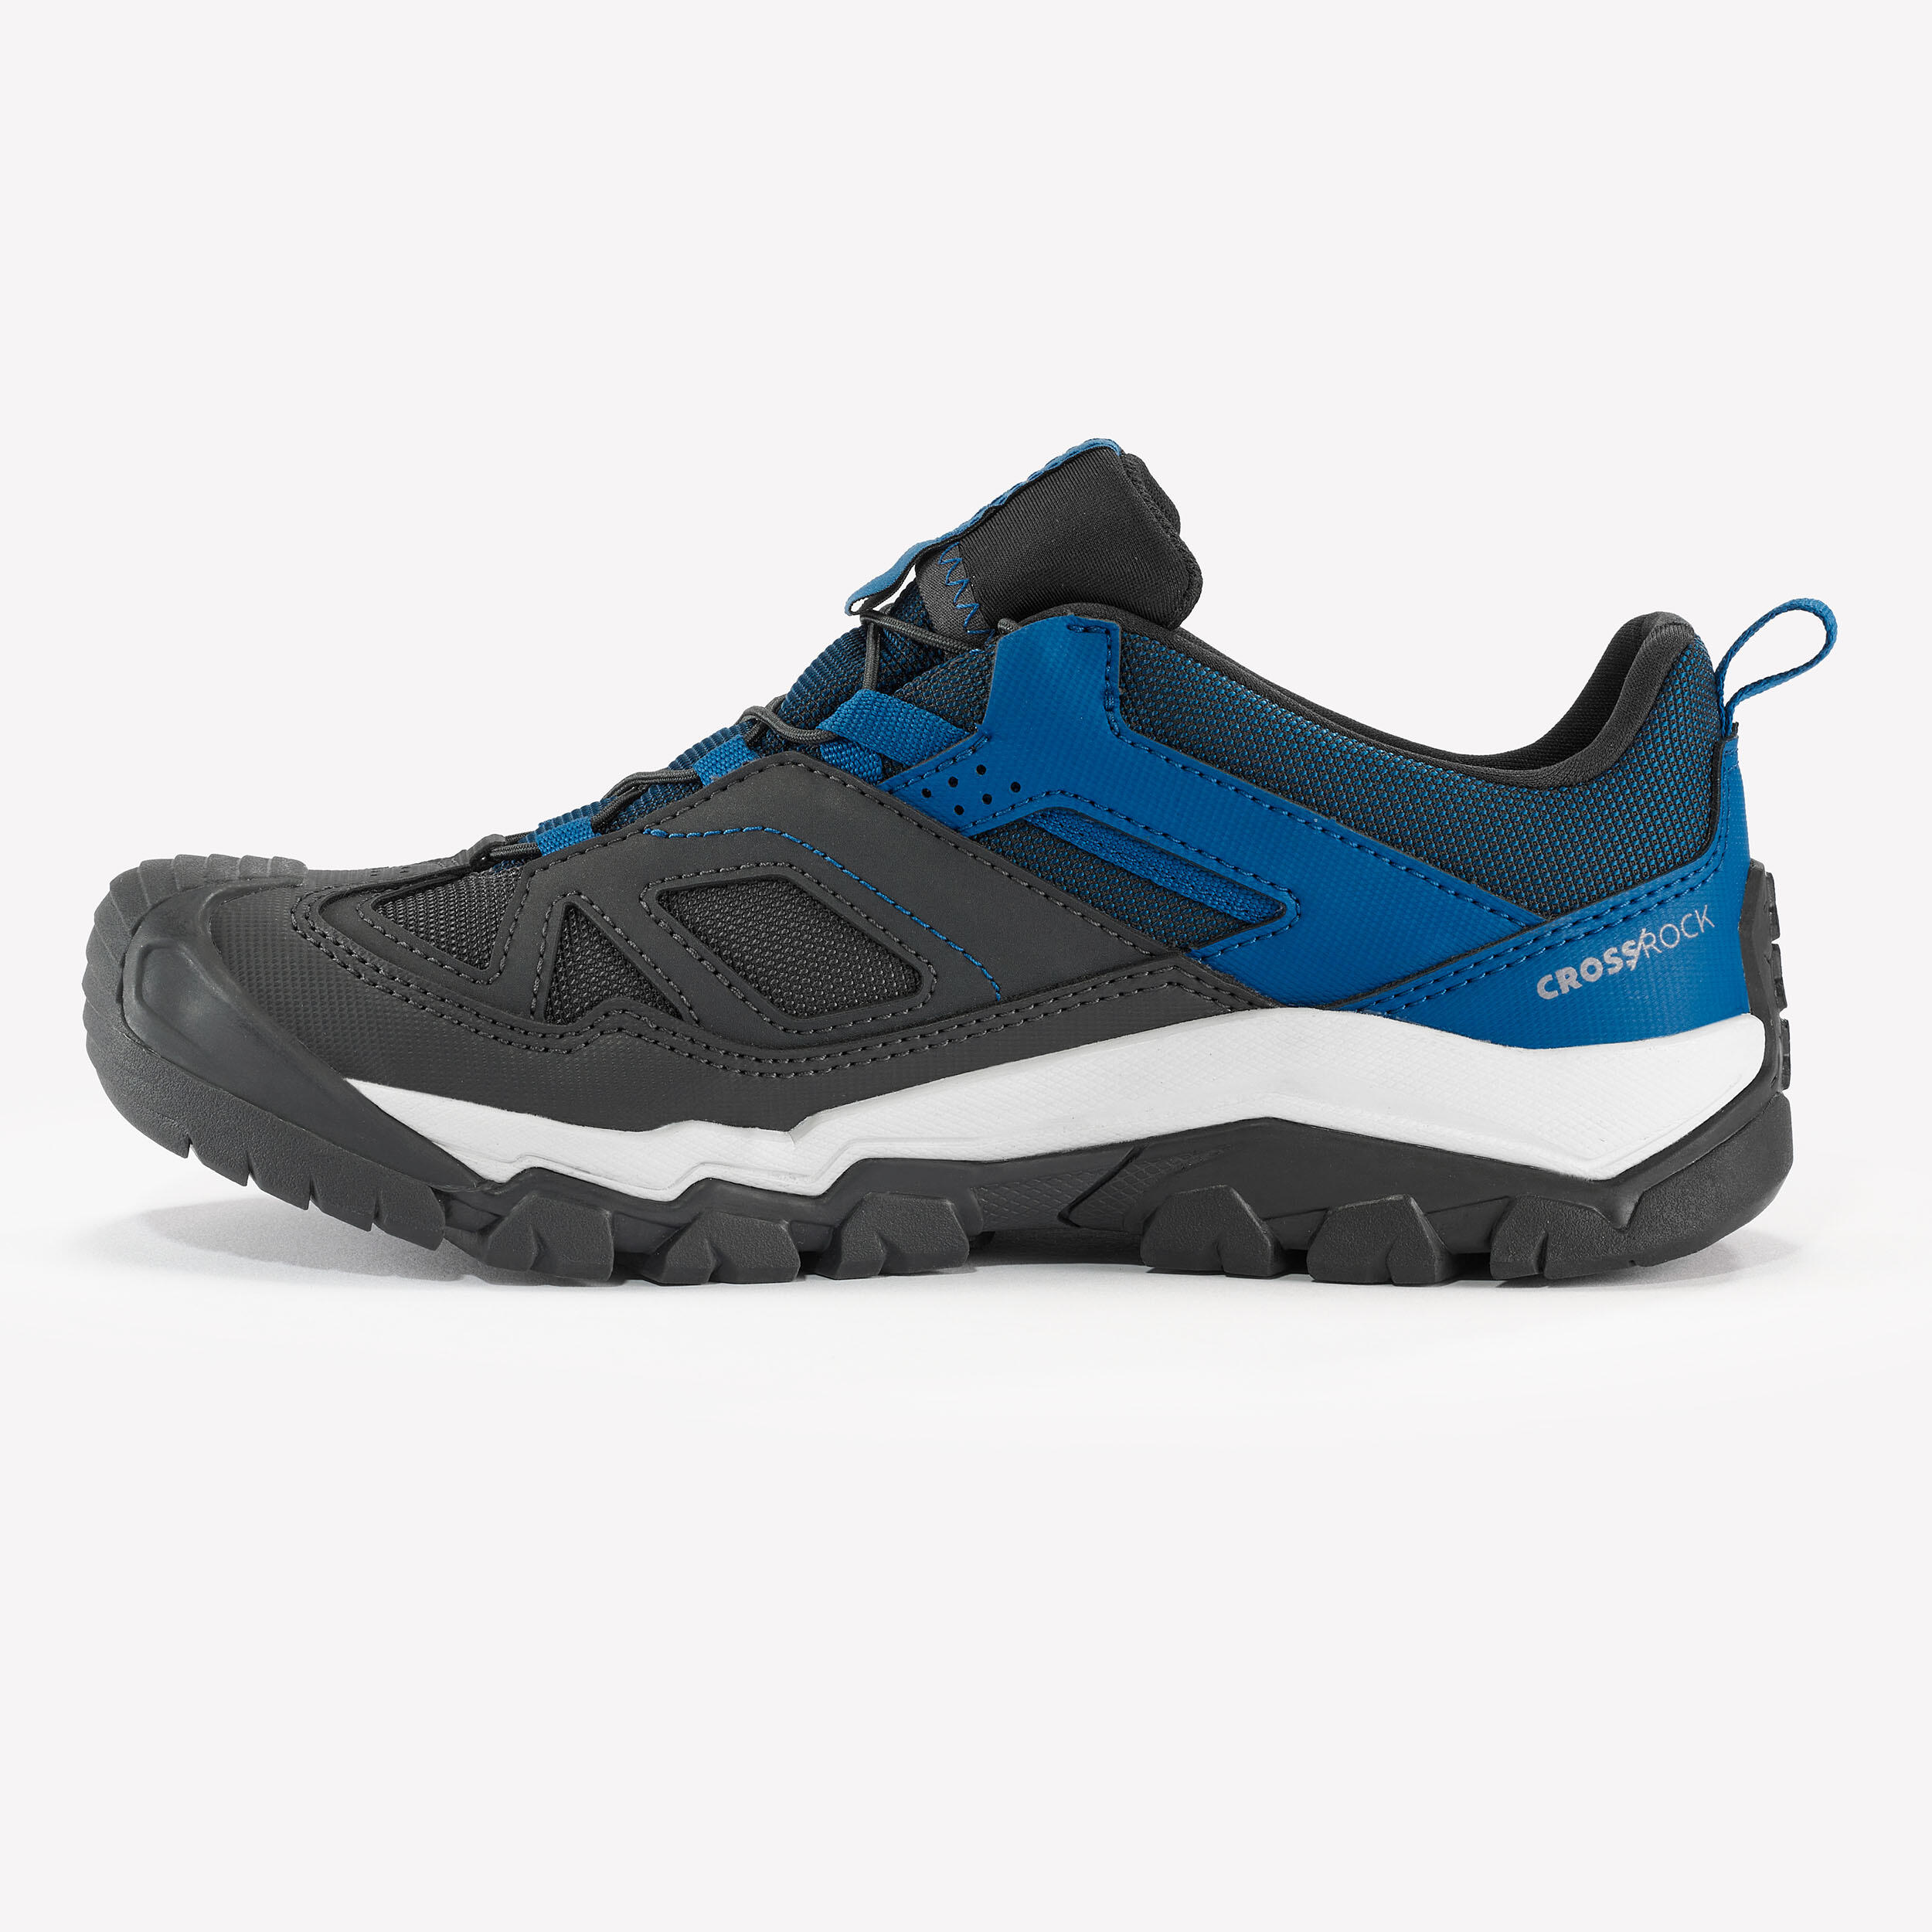 Kids’ Waterproof Lace-up Hiking Shoes - CROSSROCK UK size 2.5 - 5 - Blue 3/10